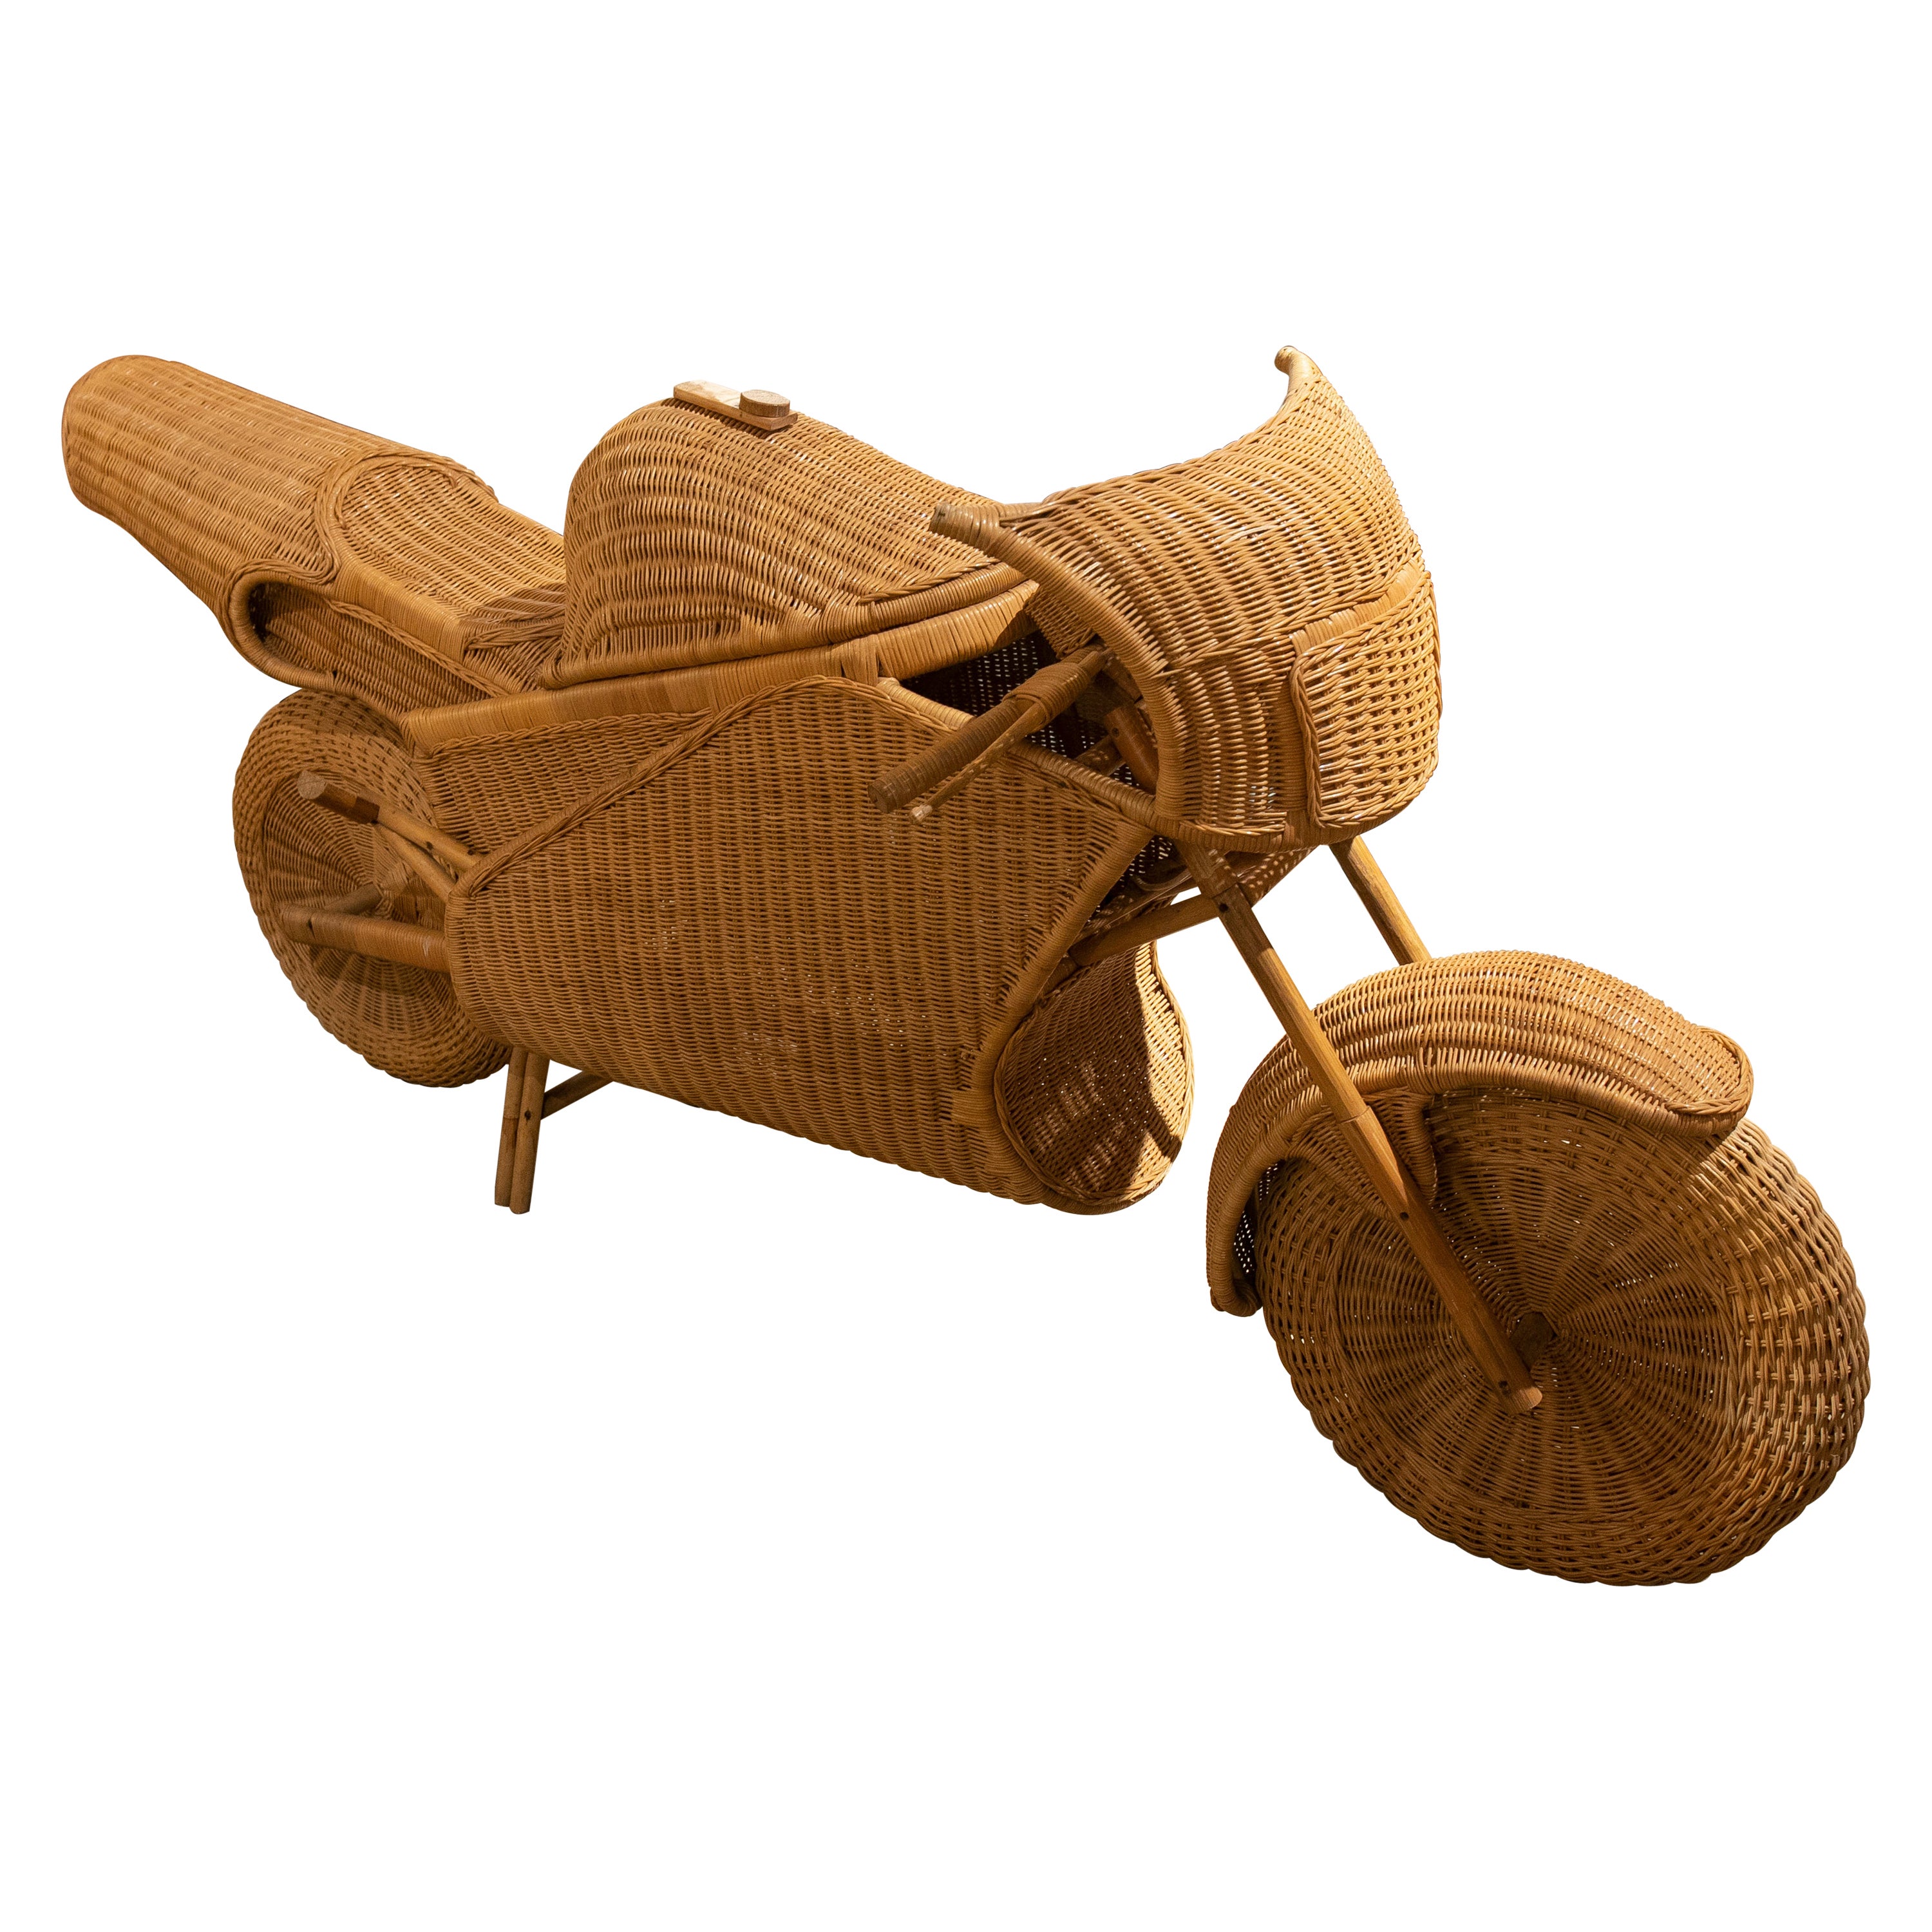 1970s Handmade Wicker and Bamboo Racing Motorcycle